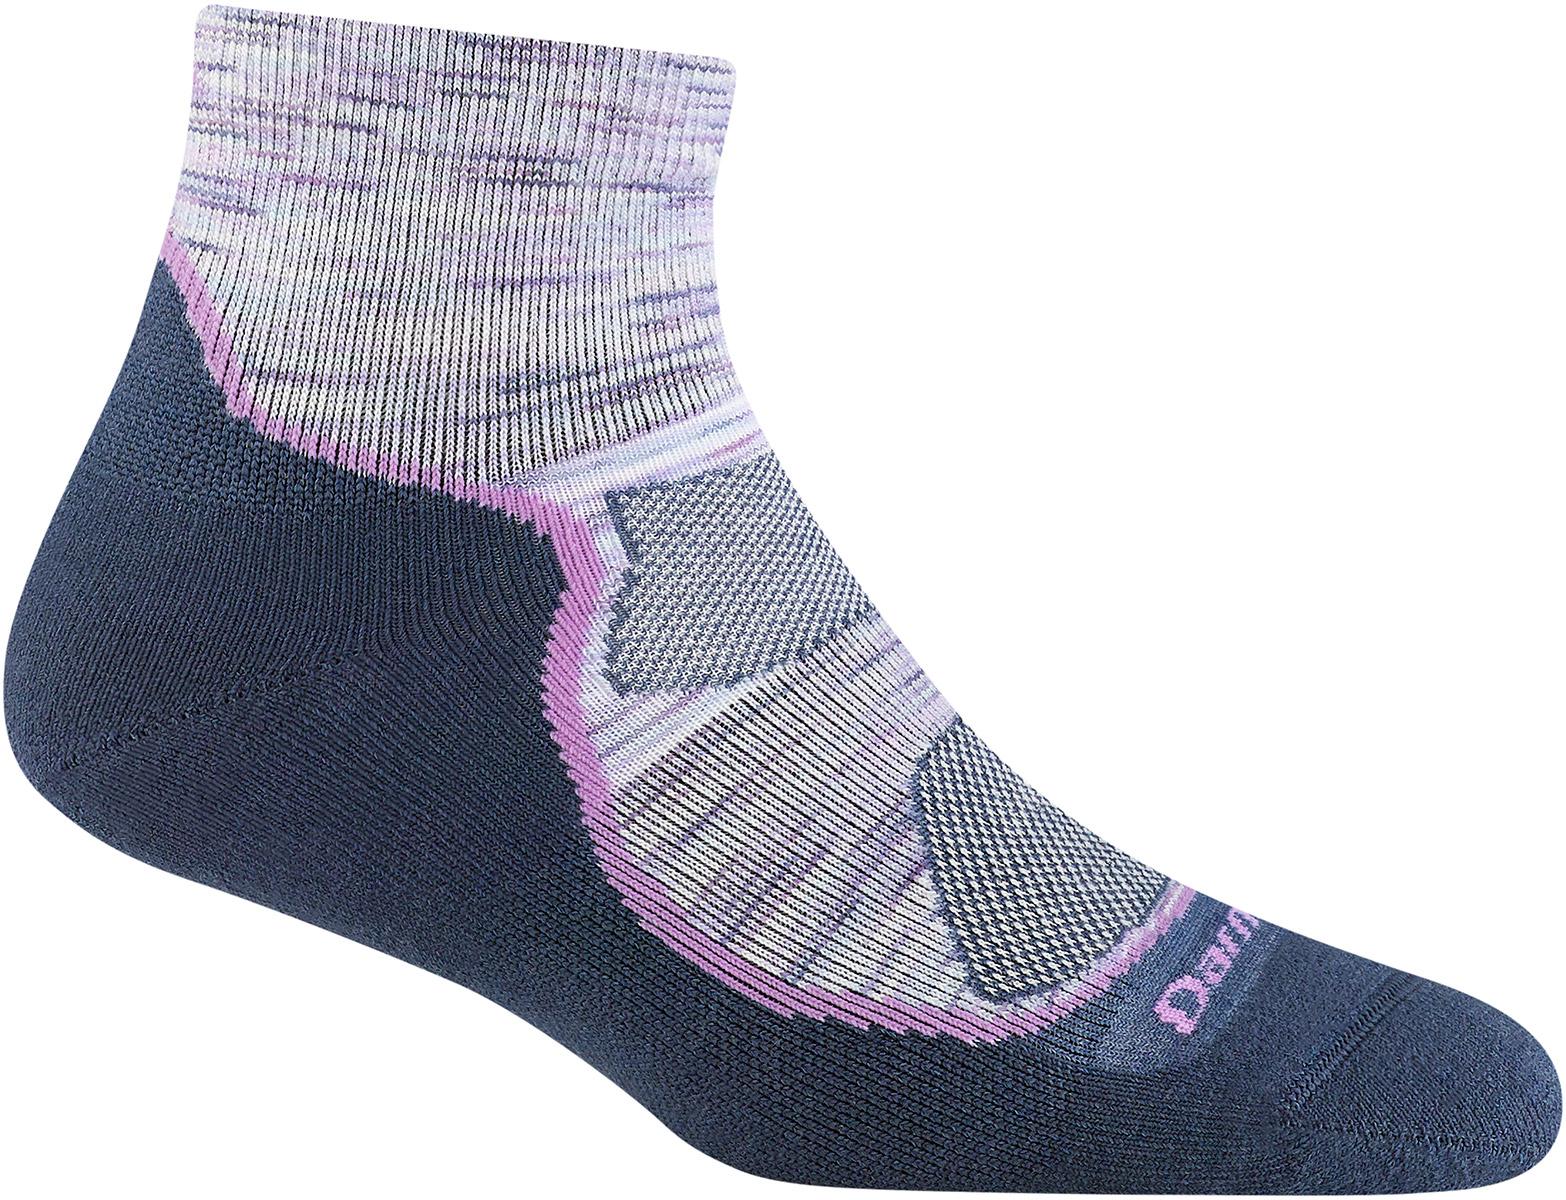 Darn Tough Womens Light Hiker Quarter Socks With Cushion - Cosmic Purple